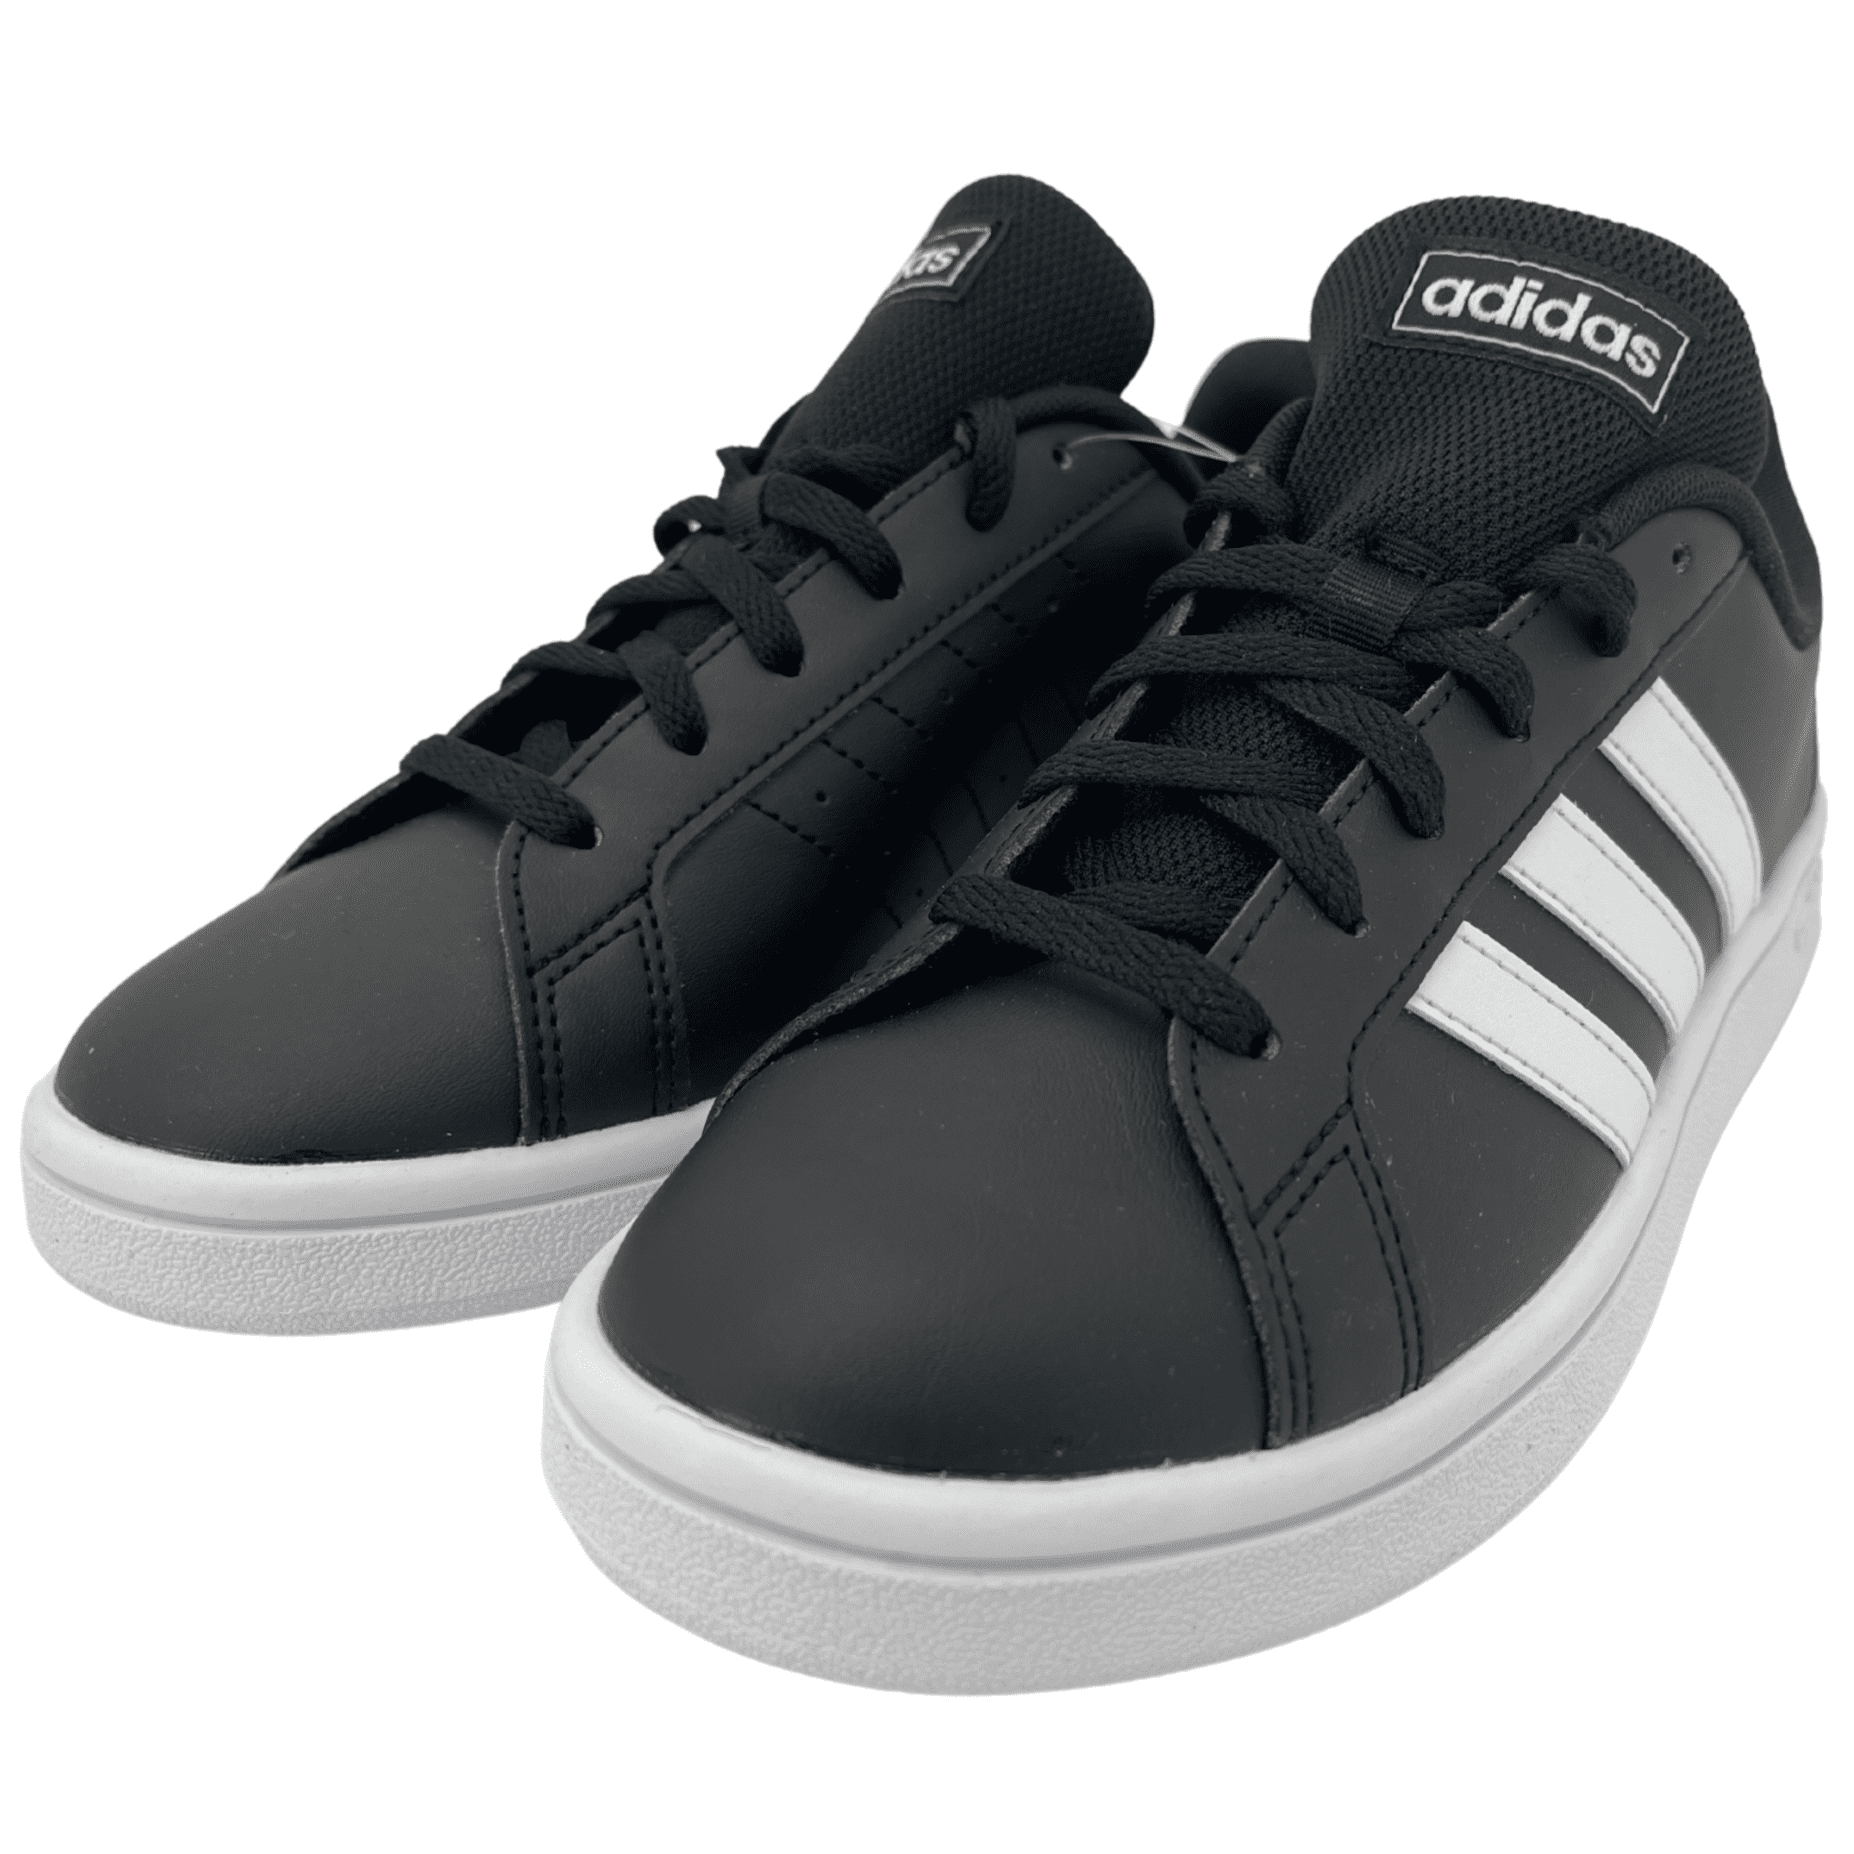 Adidas Women's Sneaker / Grand Court Base / Black / Size 5